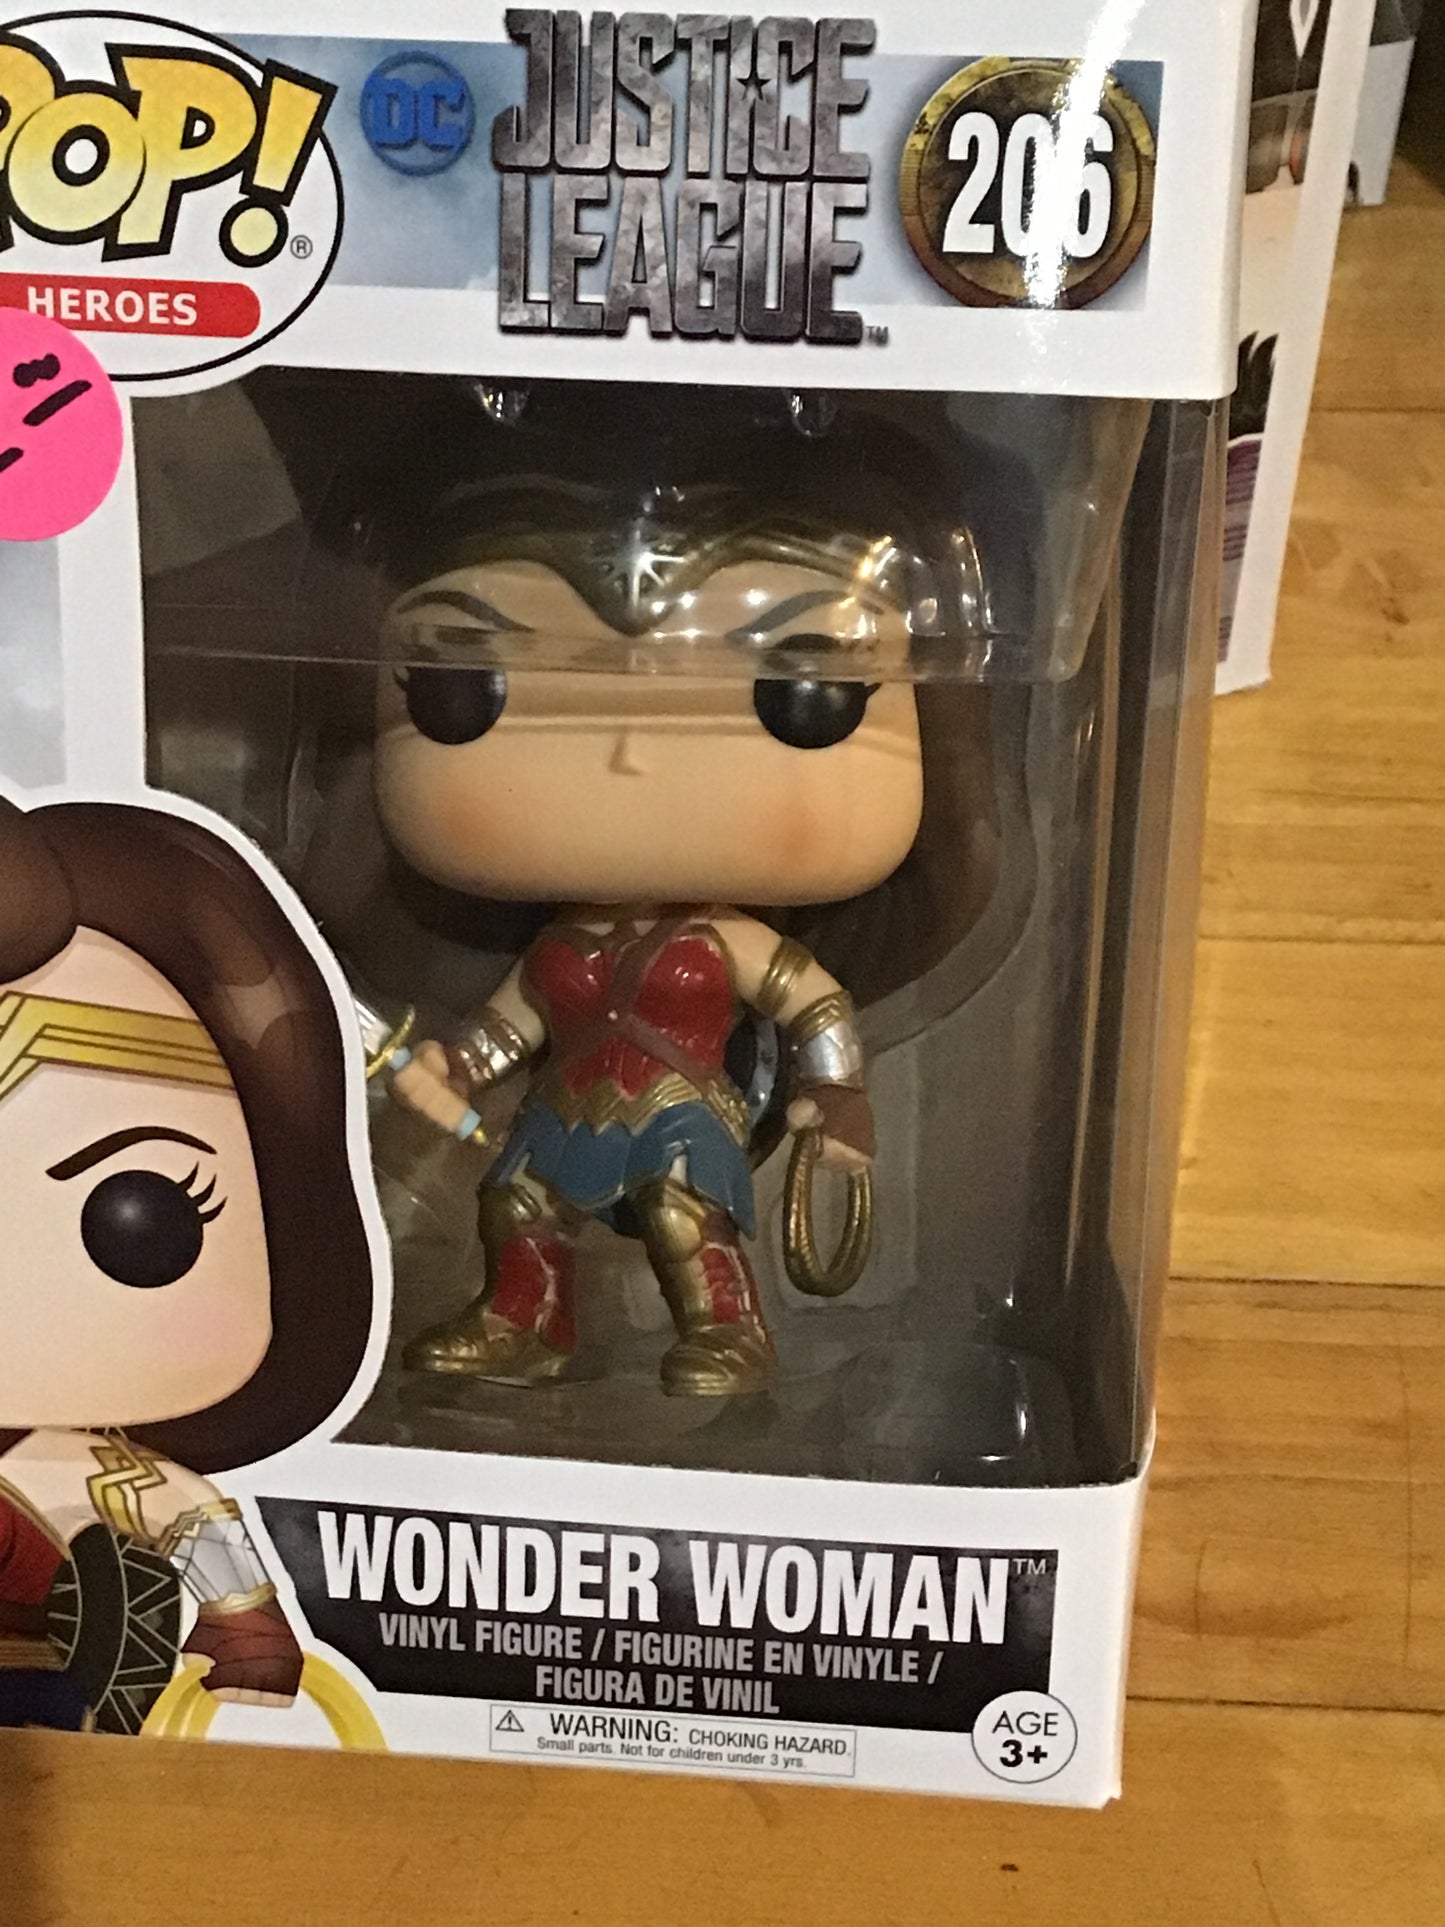 Wonder Woman Justice League 206 Funko Pop! Vinyl Figure dc comics